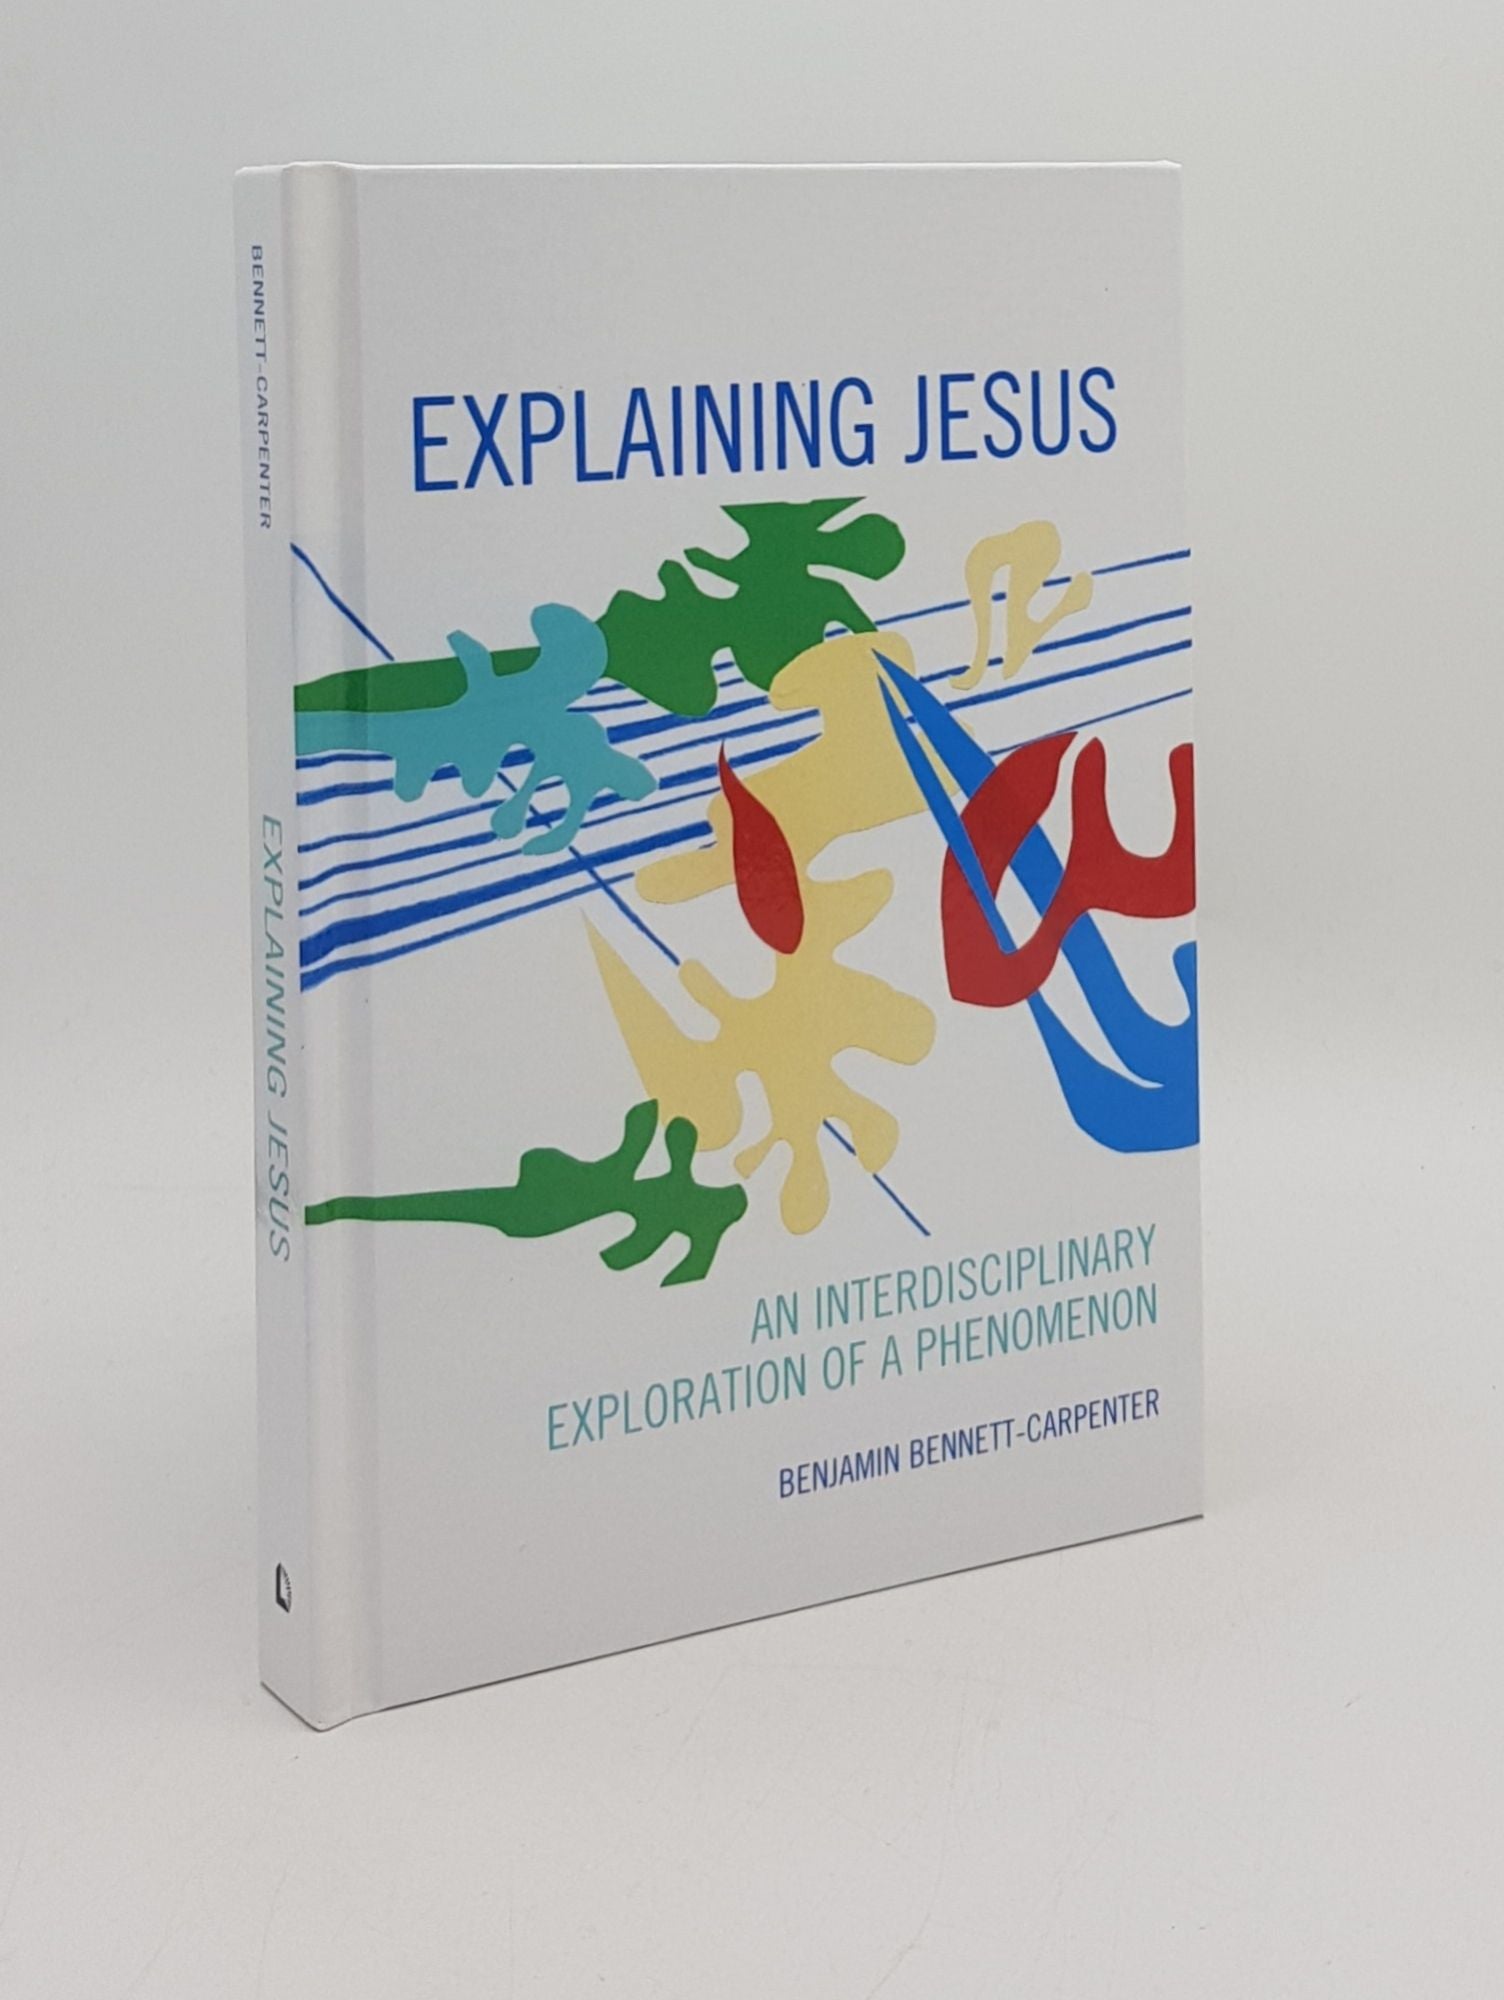 BENNETT-CARPENTER Benjamin - Explaining Jesus an Interdisciplinary Exploration of a Phenomenon